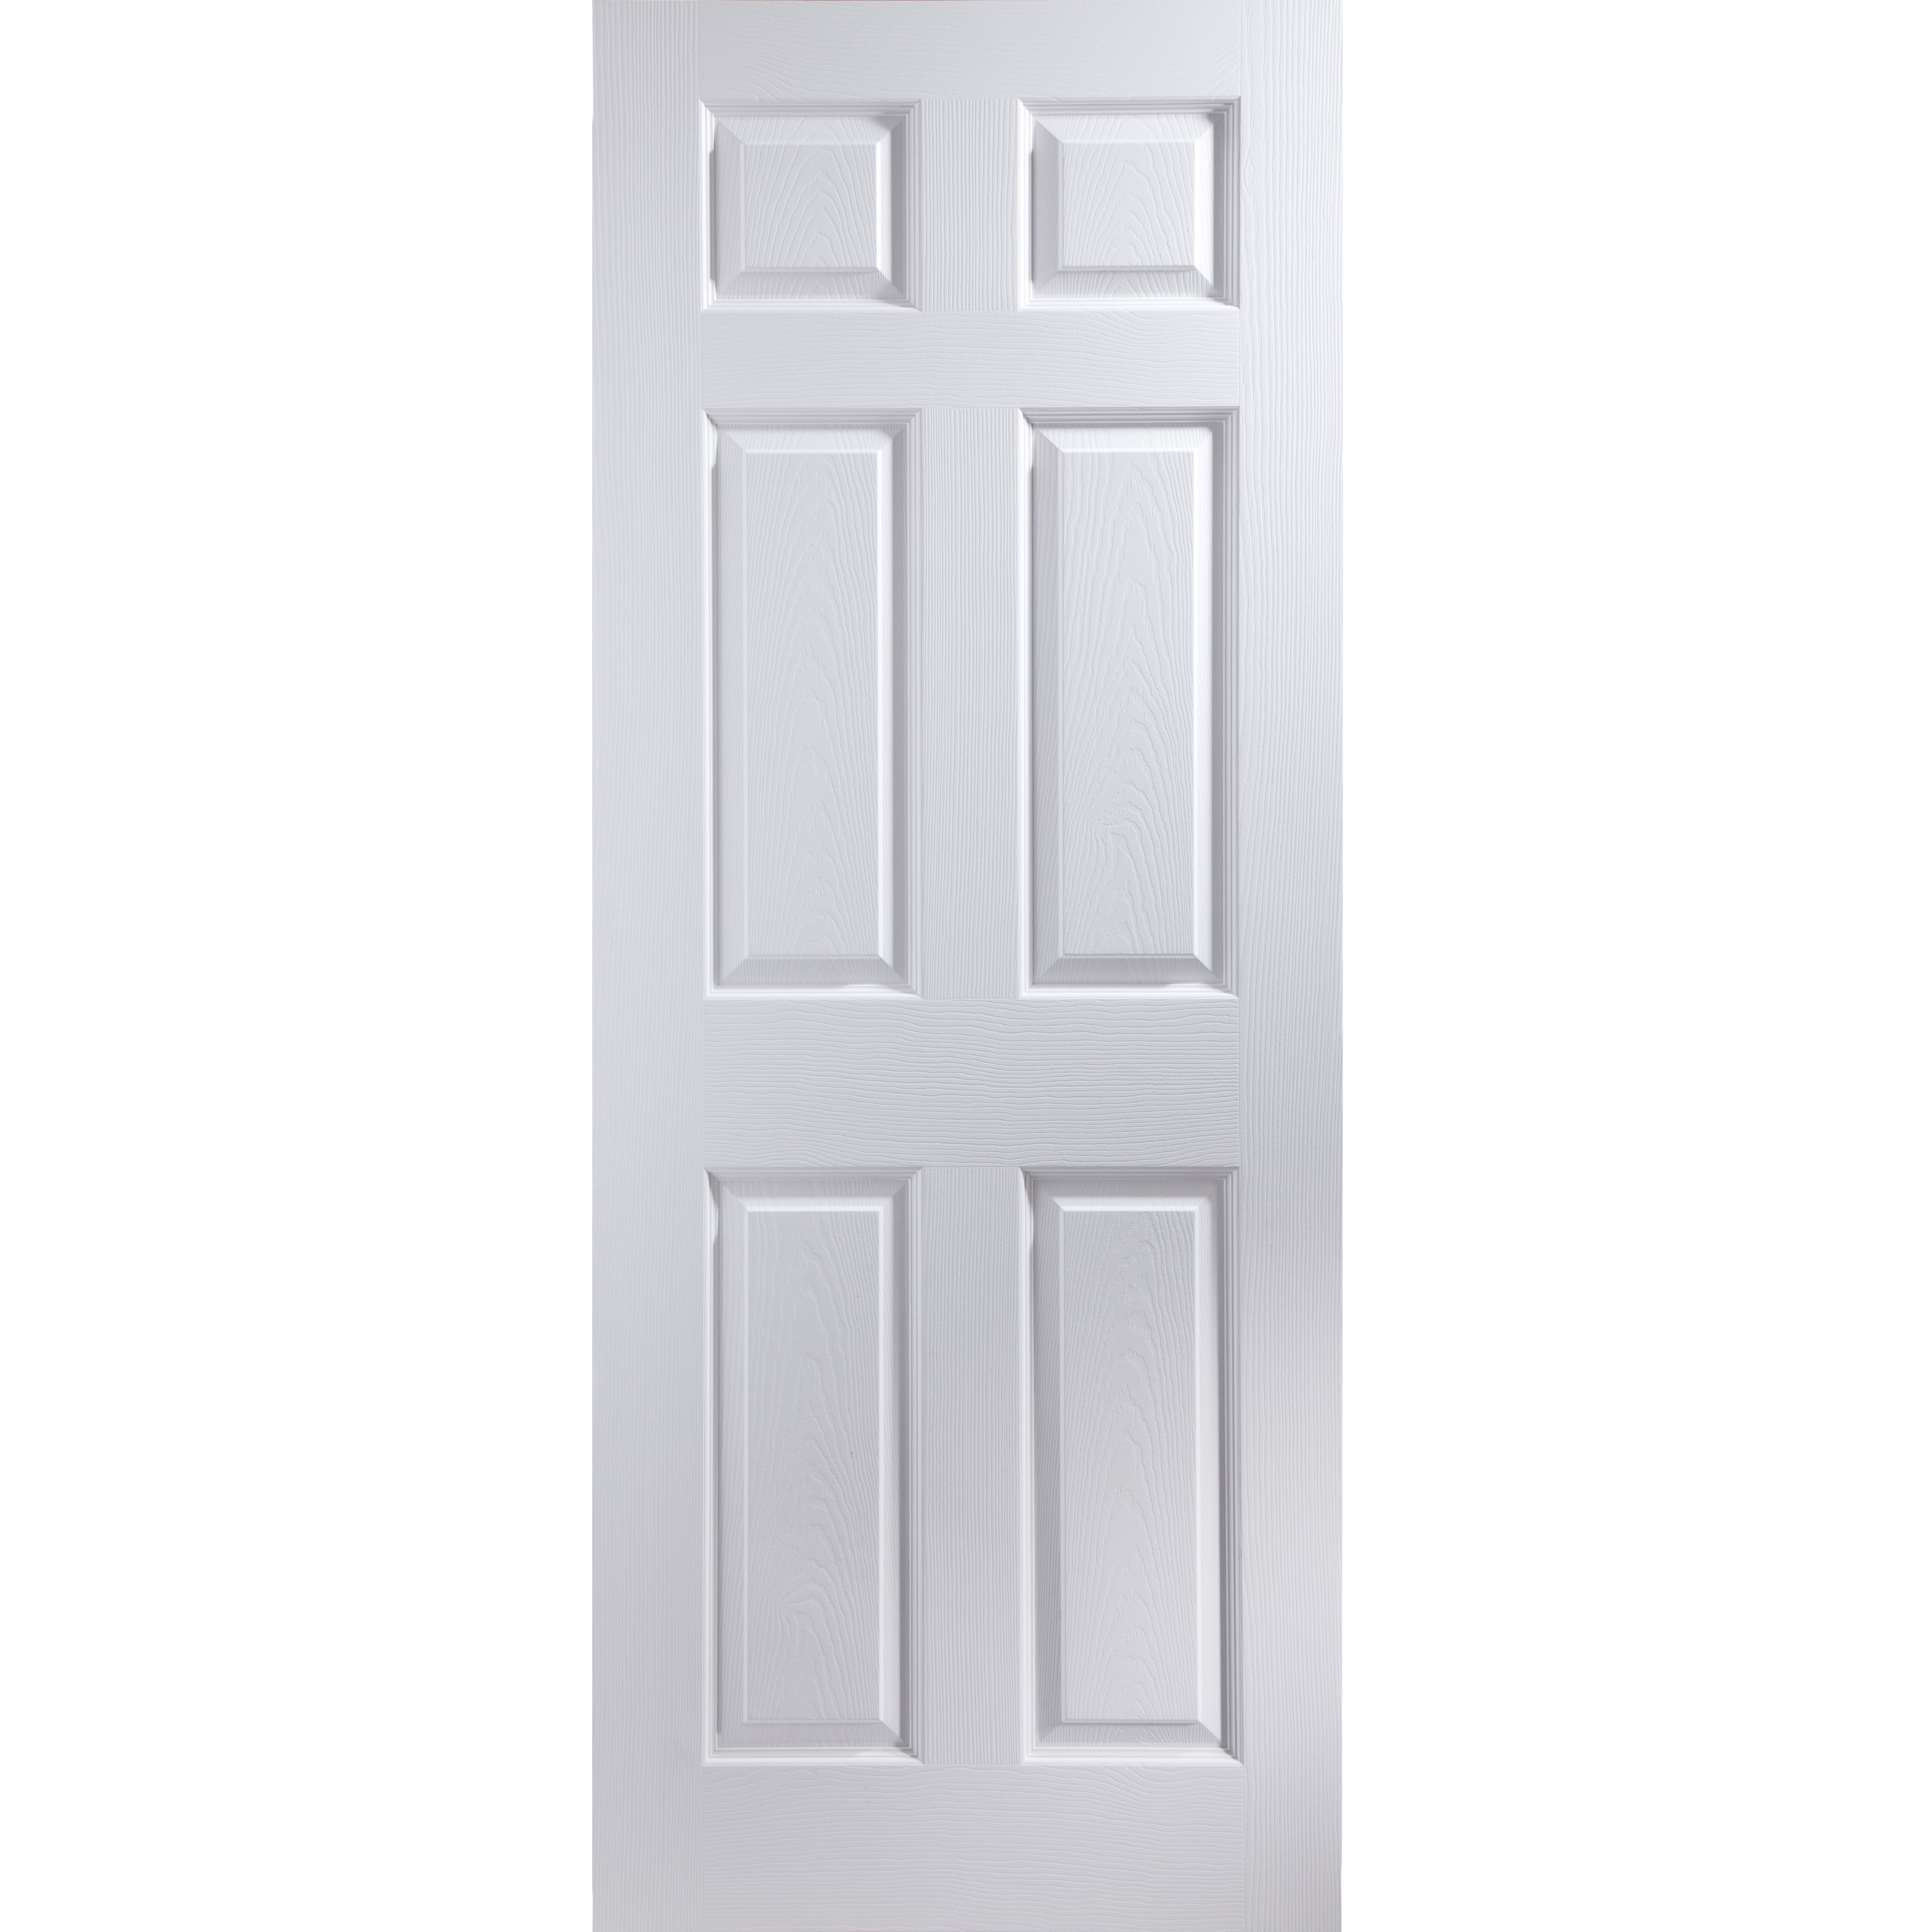 B Q 6 Panel White Woodgrain Effect Internal Door H 2040mm W 726mm T 40mm~5397007098440 01bq?$MOB PREV$&$width=768&$height=768